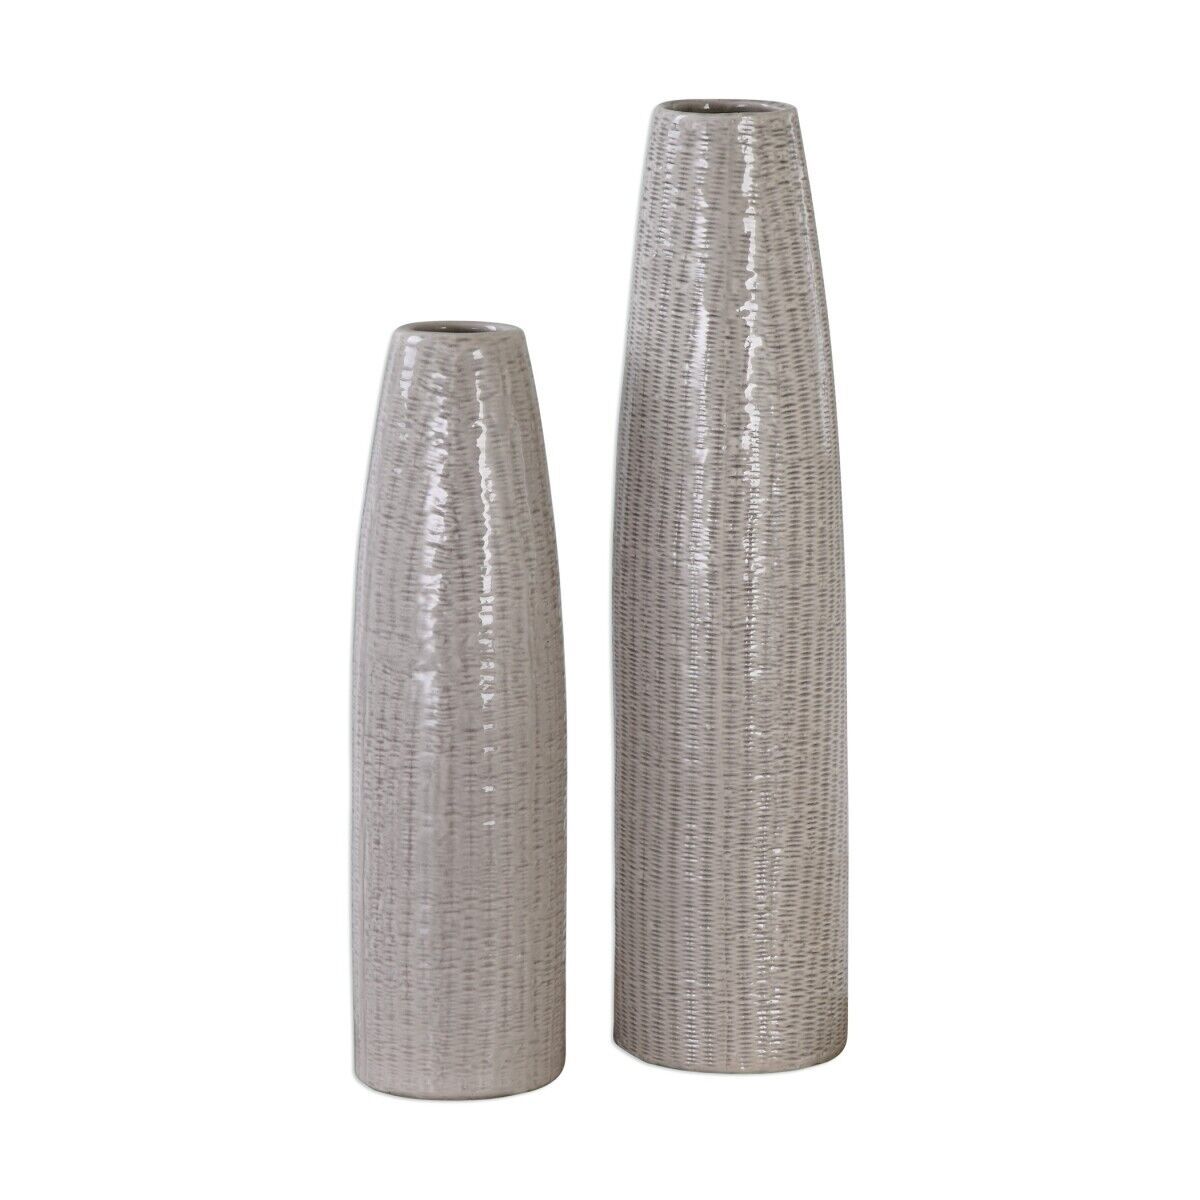 Primary image for 212 Main 20156 Sara Textured Ceramic Vases  Set of 2